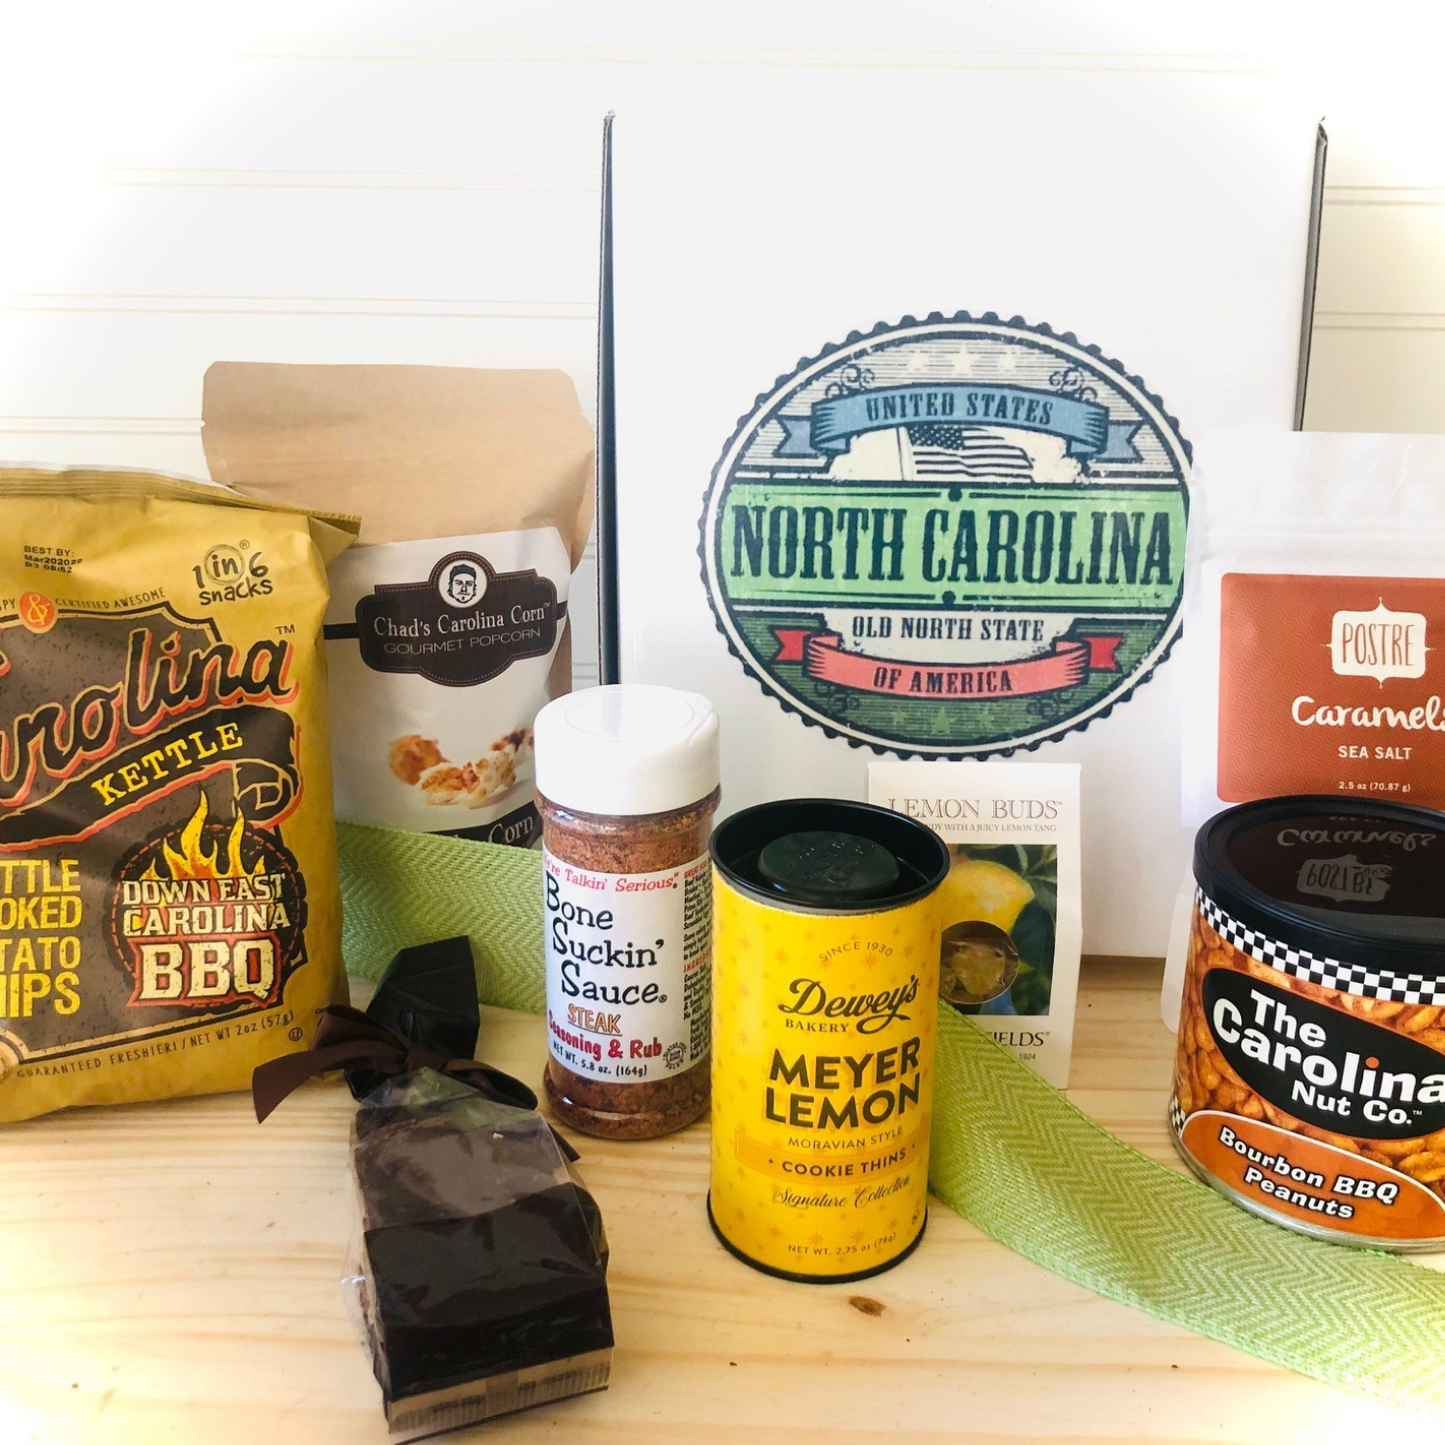 Taste of North Carolina Gift Box